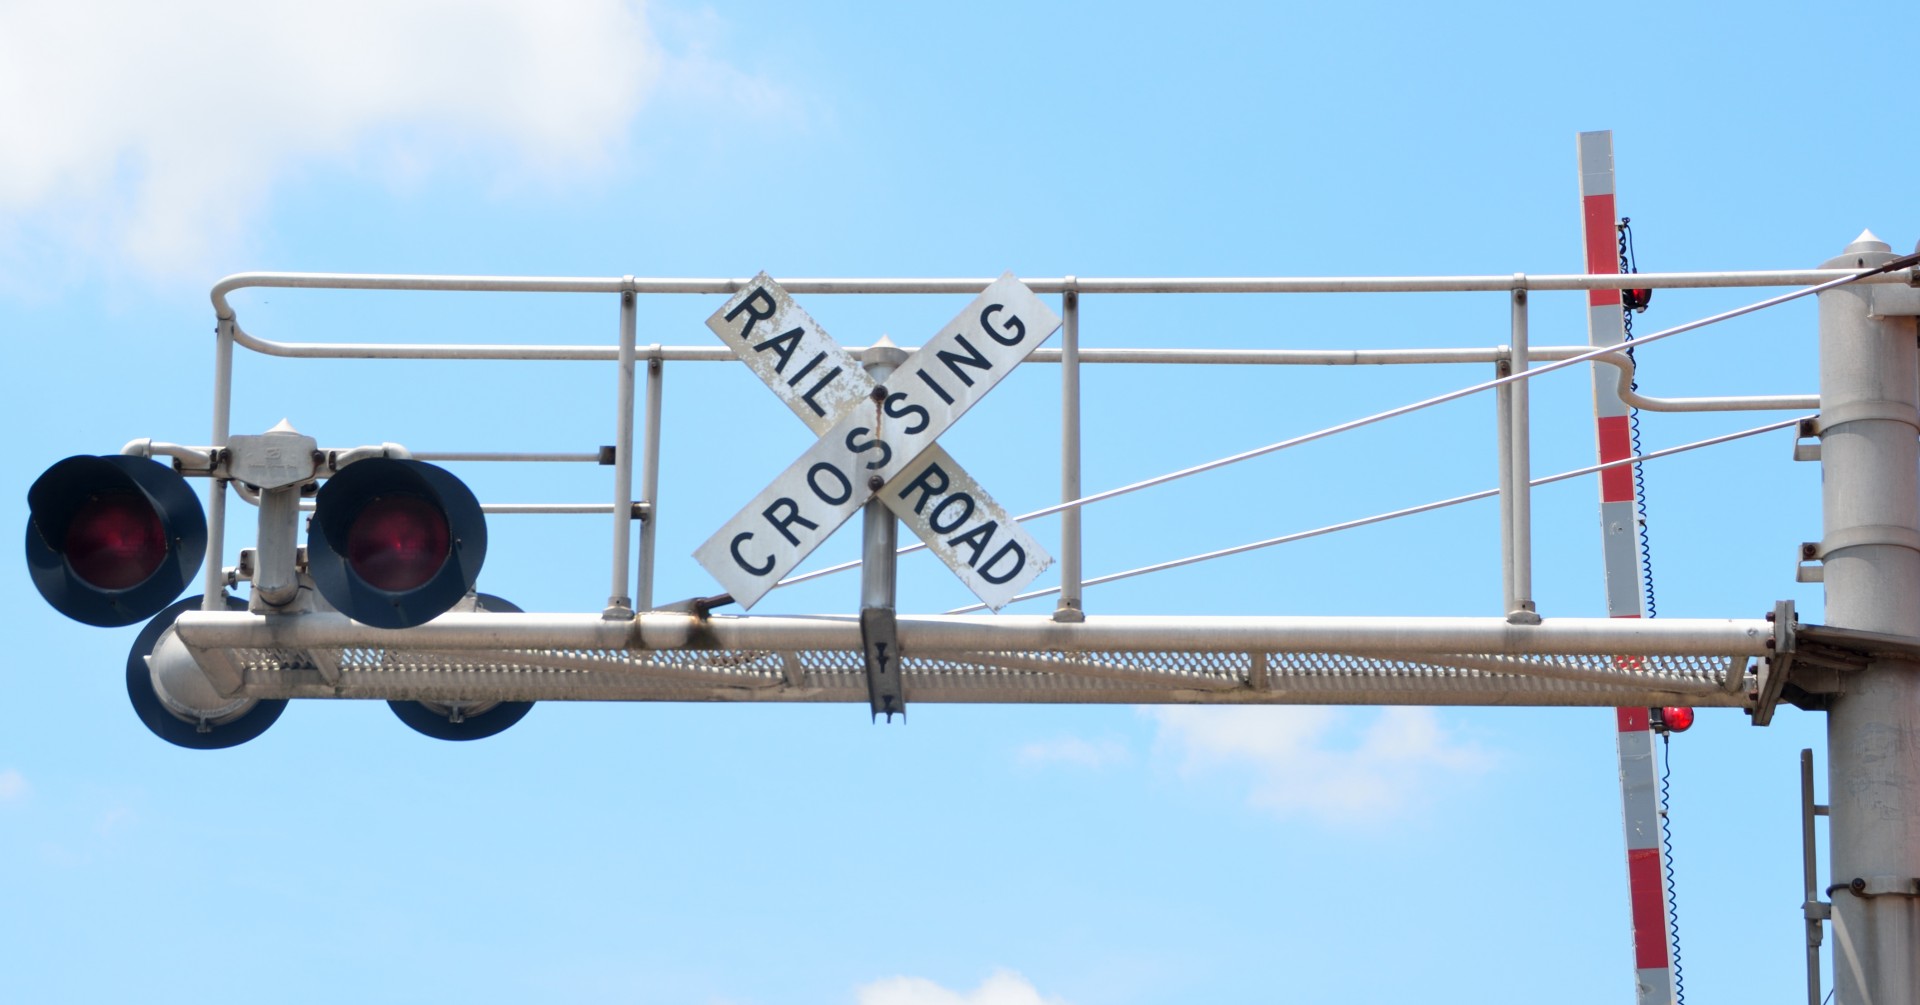 Railroad crossing signal